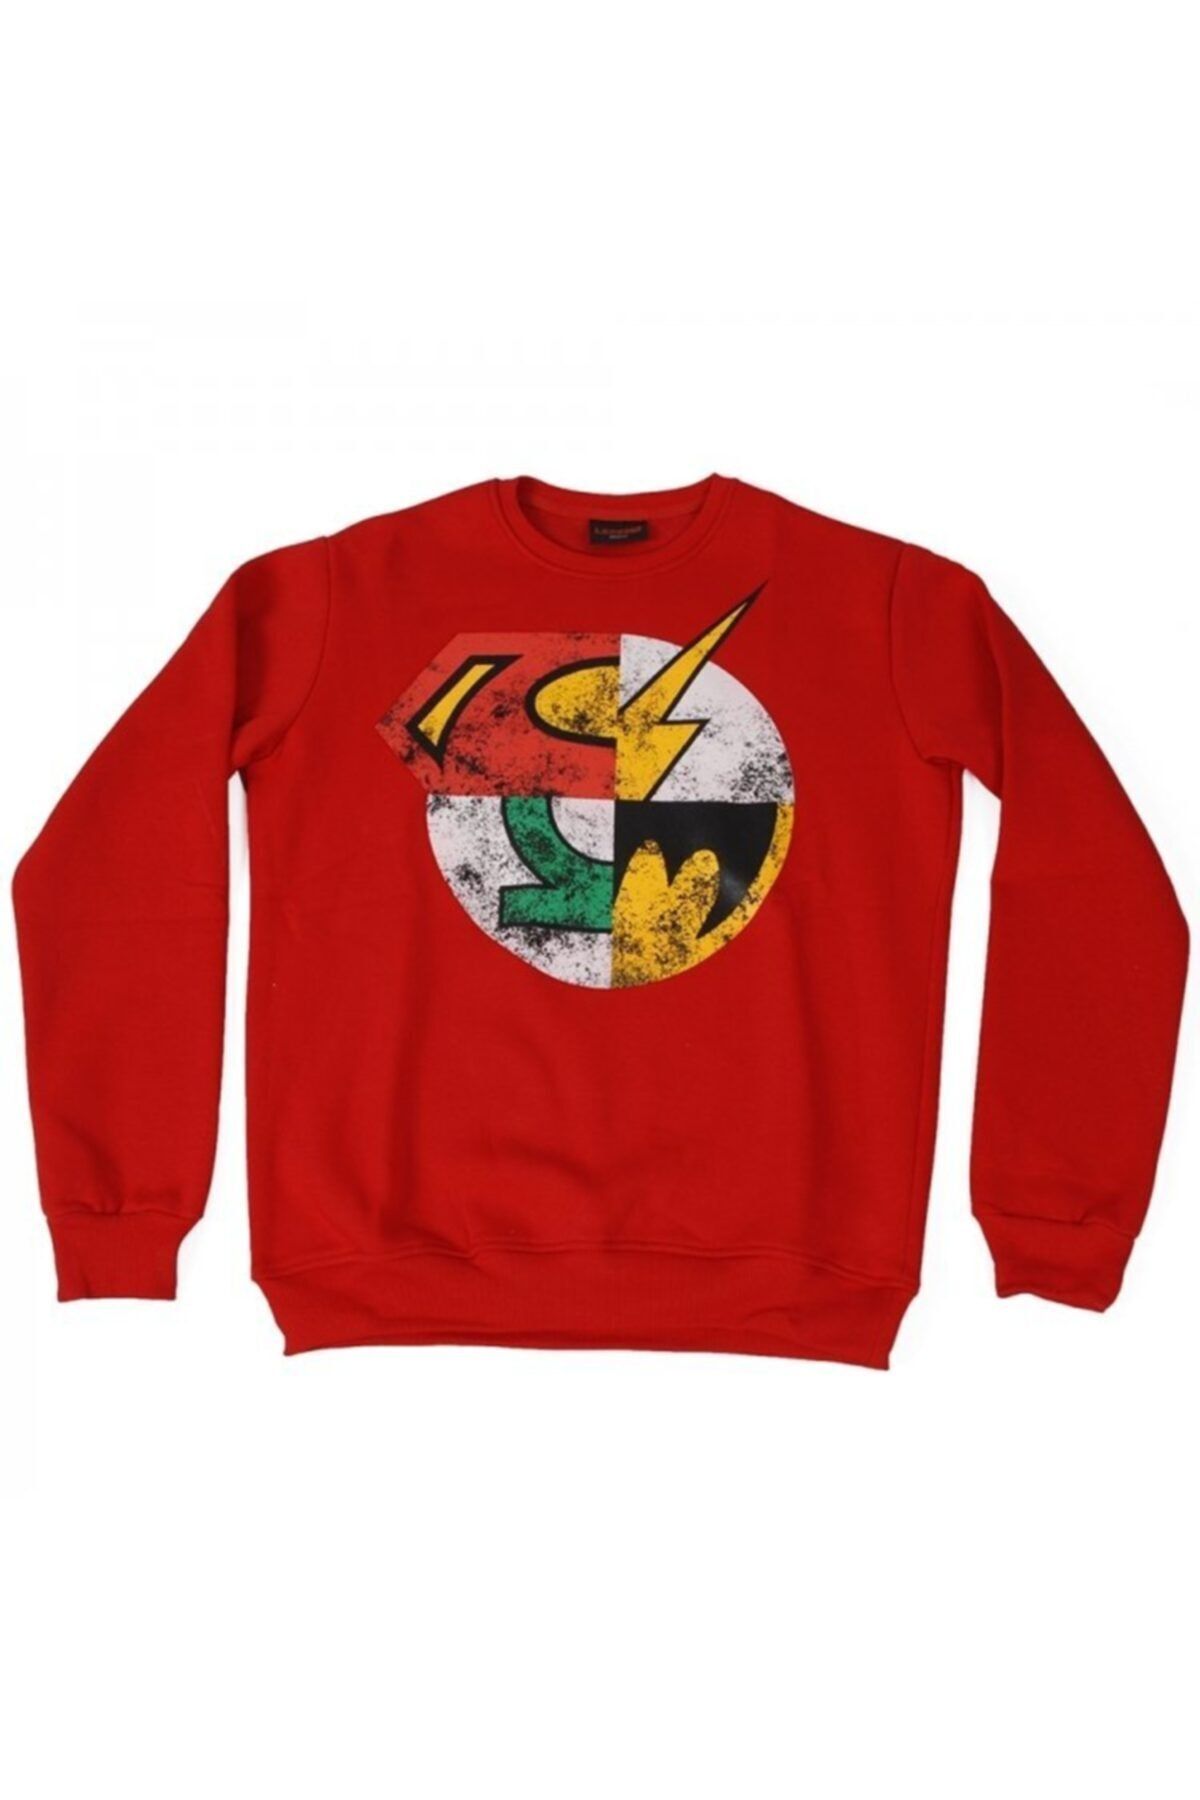 TM & DC Comics-Warner Bros Unisex Kırmızı Dc Super Heroes Logo Sweatshirt